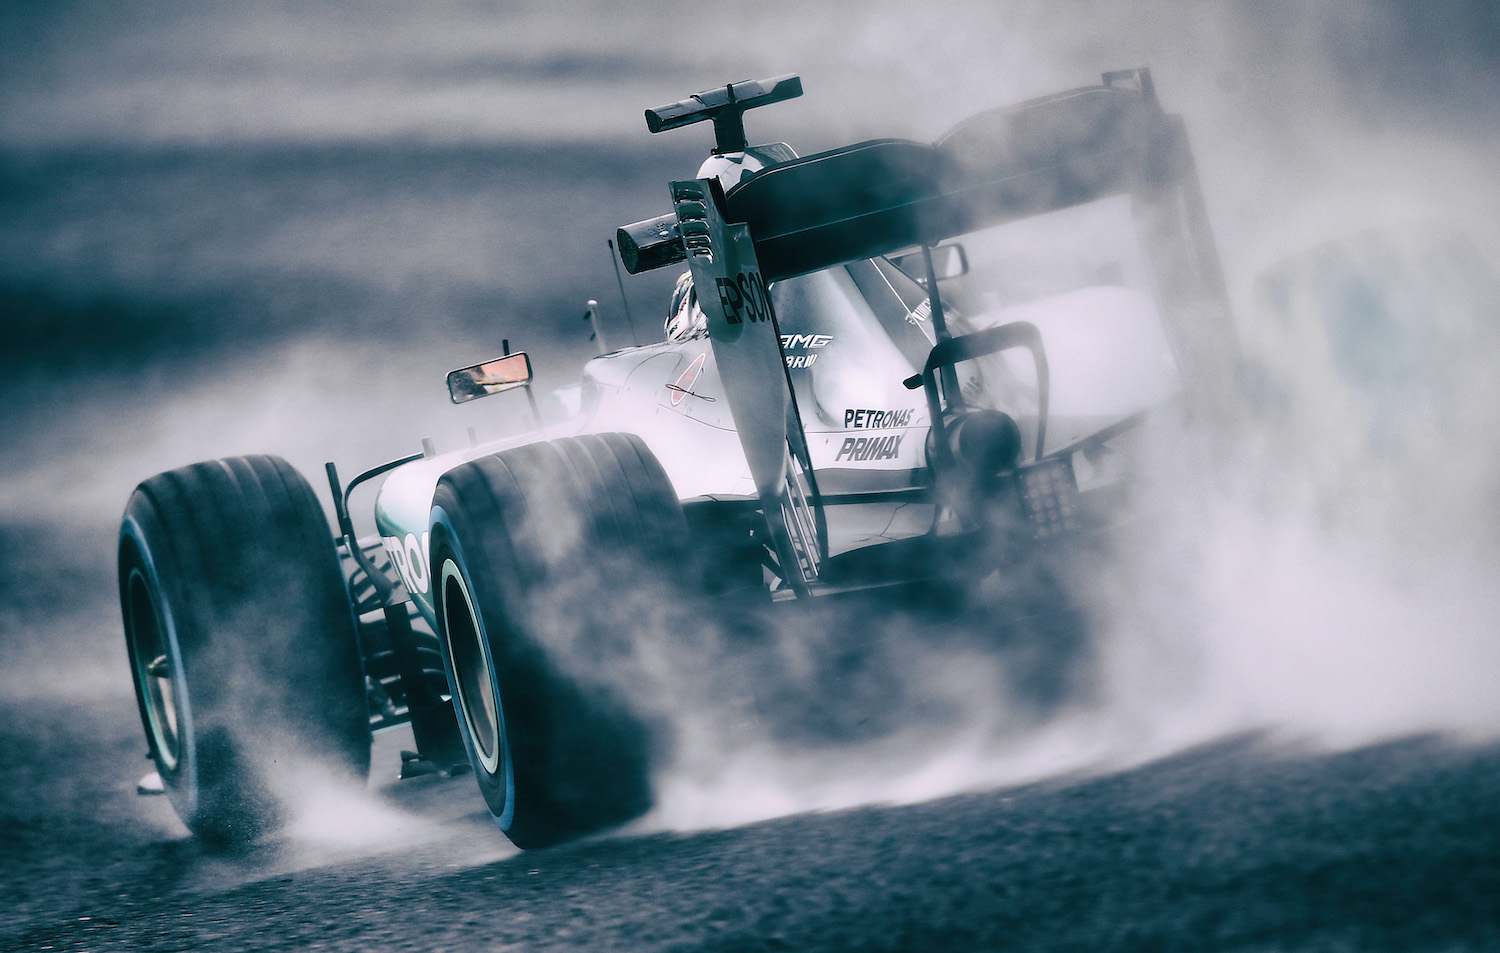 Lewis Hamilton racing his Mercedes GP. Formula 1 horsepower often reaches 1500 | Clive Mason/Getty Images